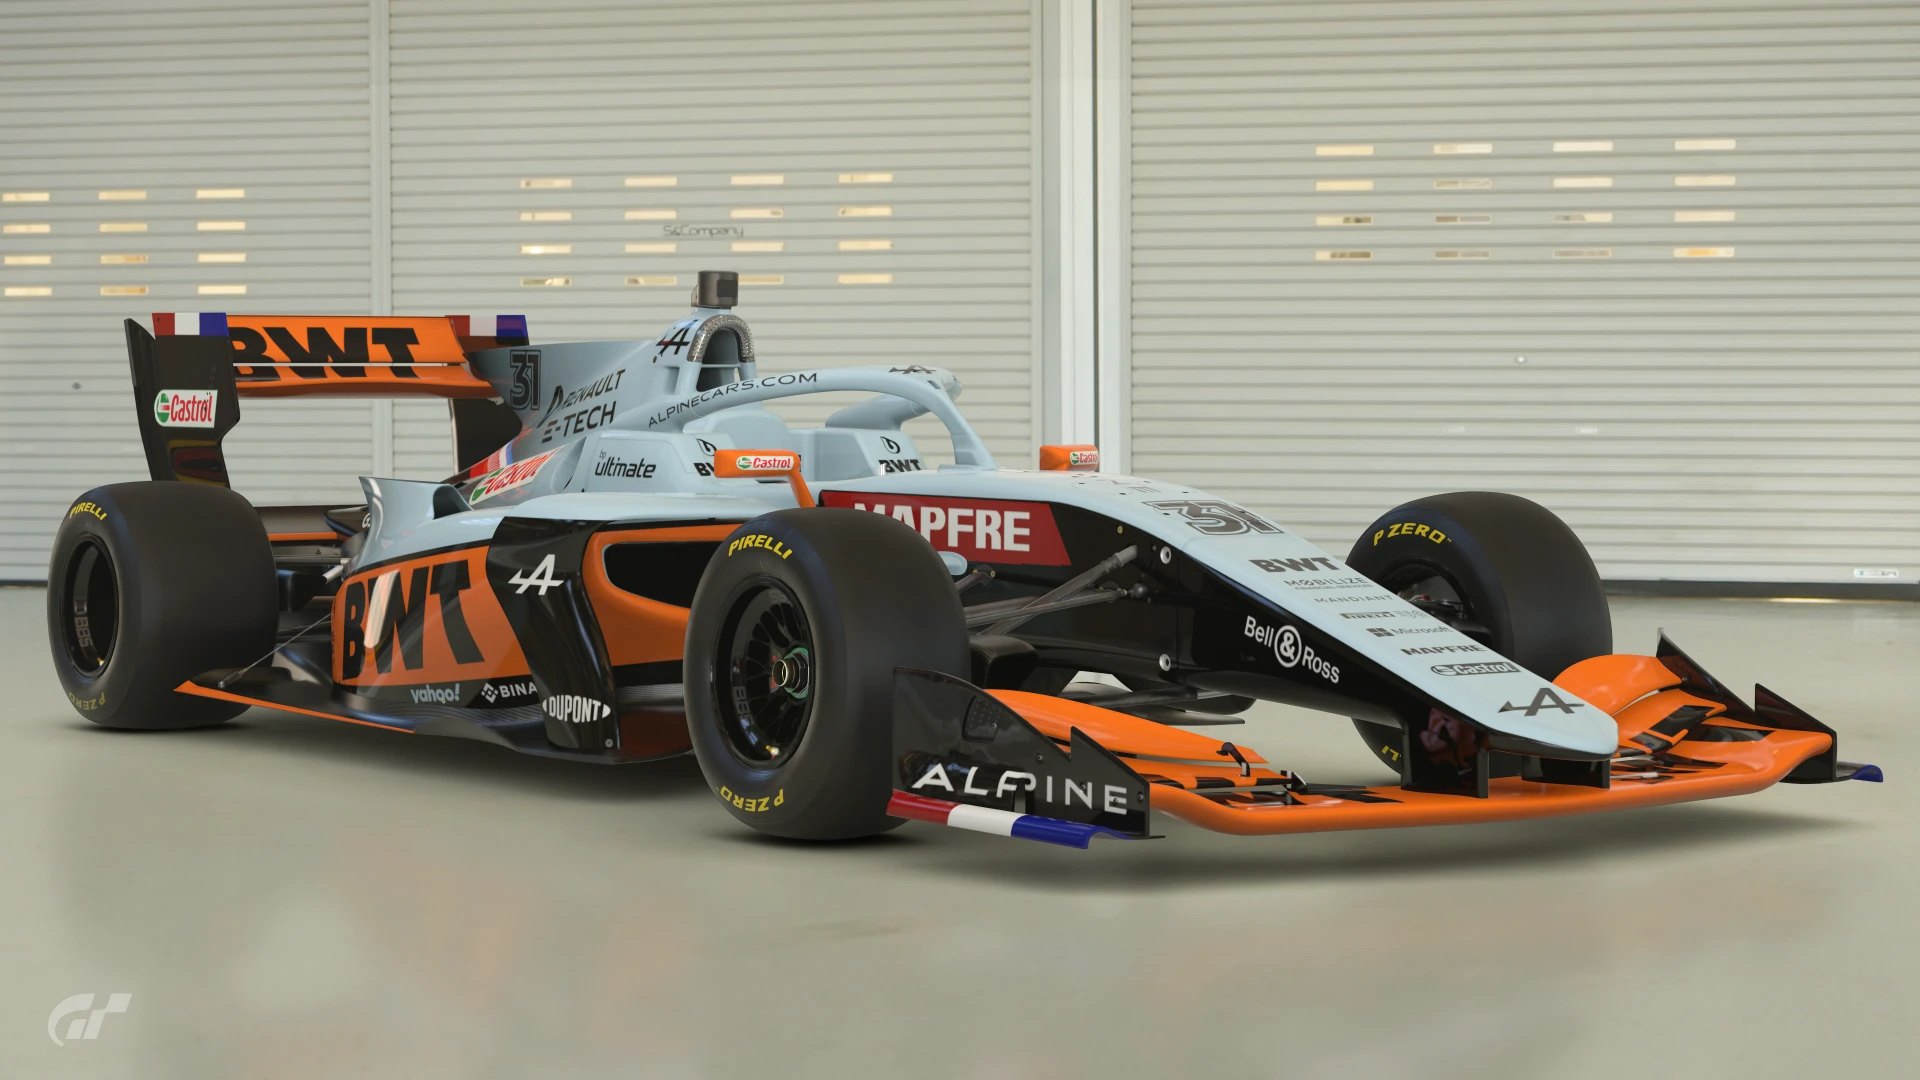 Alpine v McLaren Front